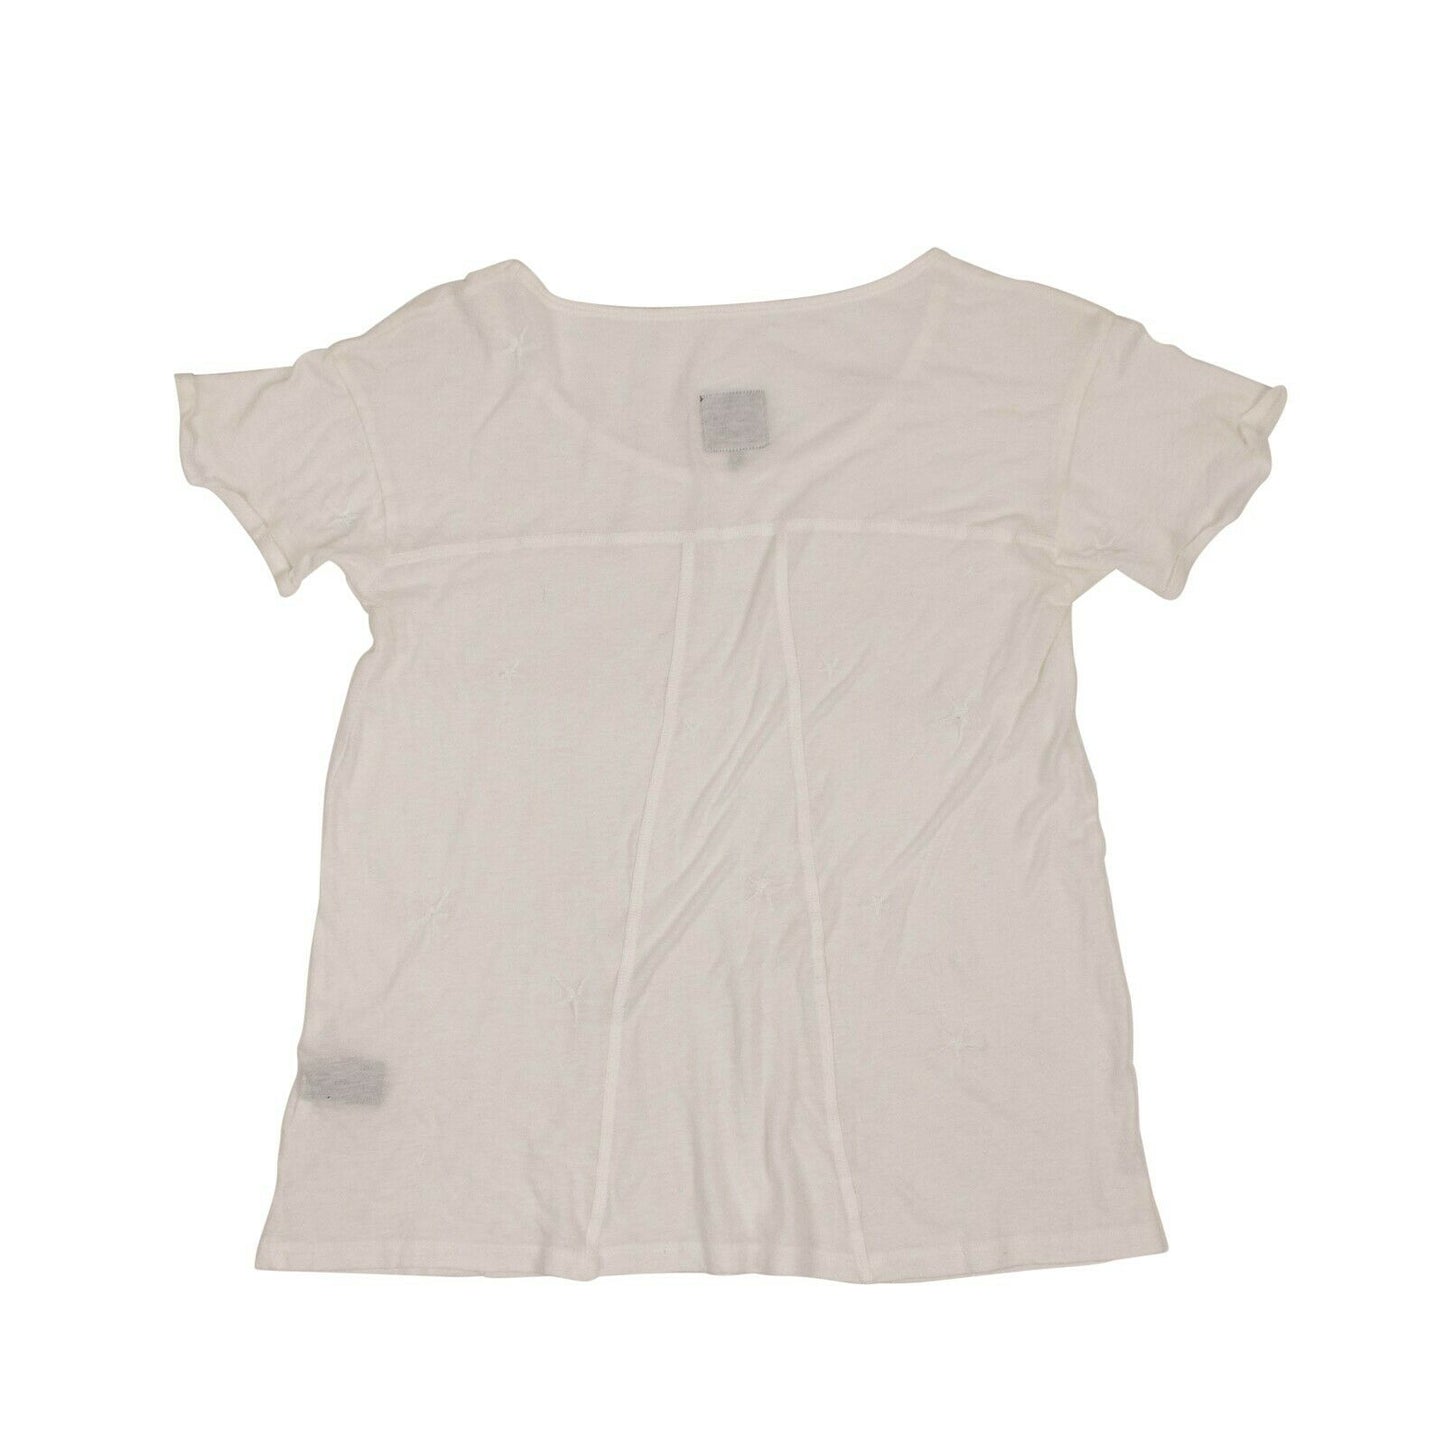 Rta Cotton 'Jewel' Short Sleeves T-Shirt - White